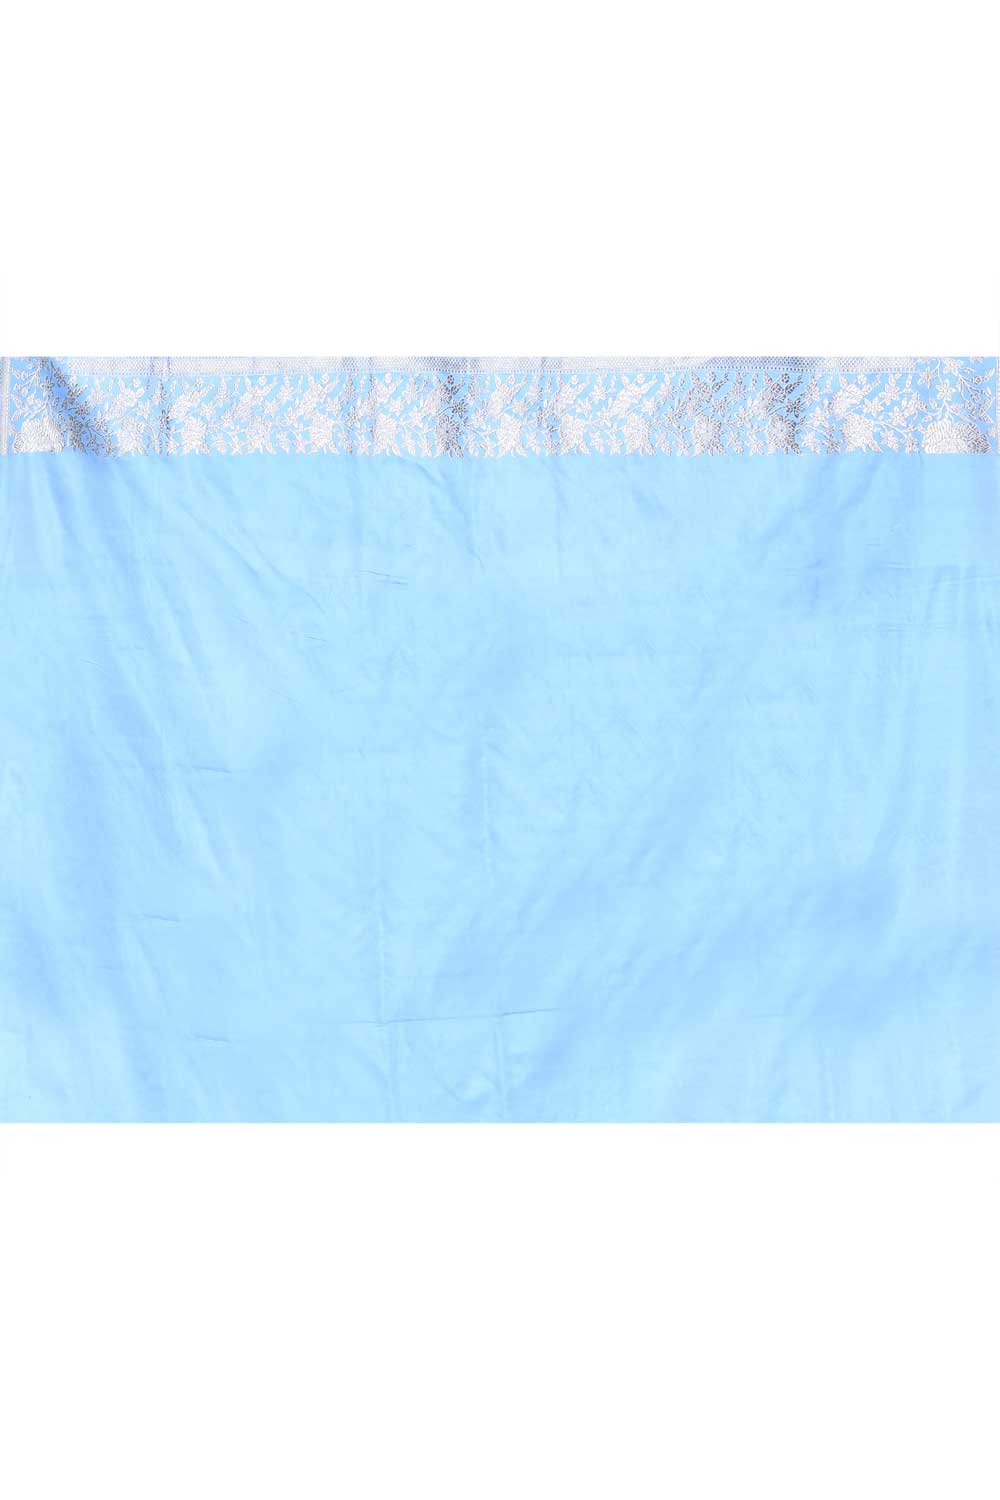 Blue Pure Katan Mushru Silk Banarasi Handloom Saree With Kadhua Border